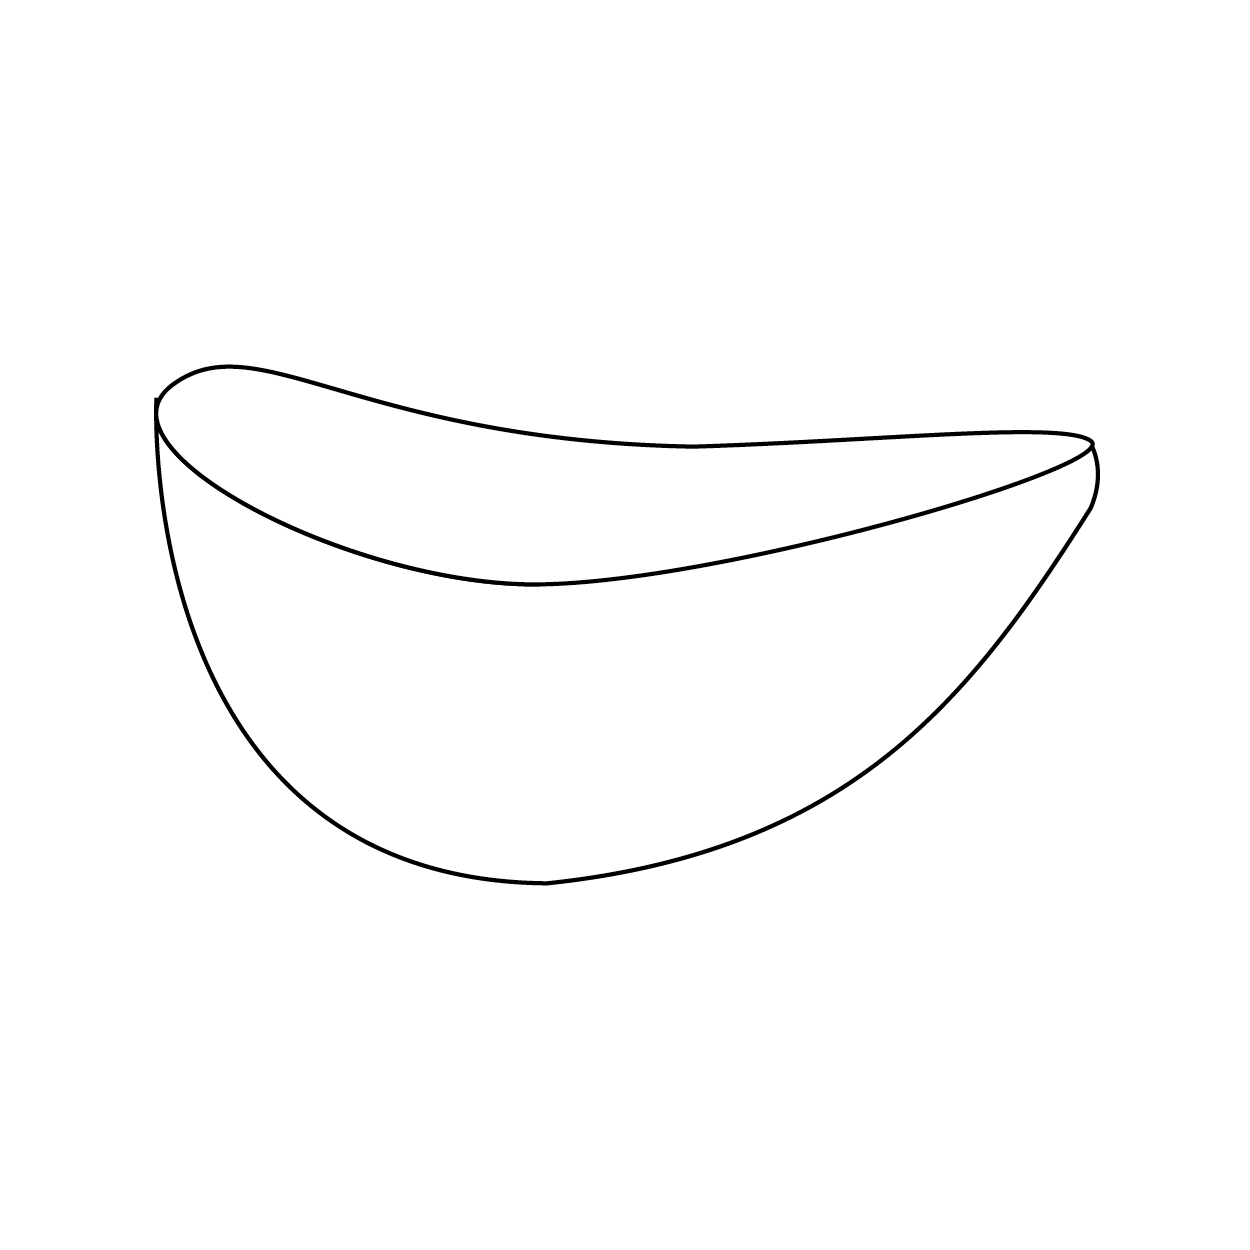 Illustration of a menstrual bowl